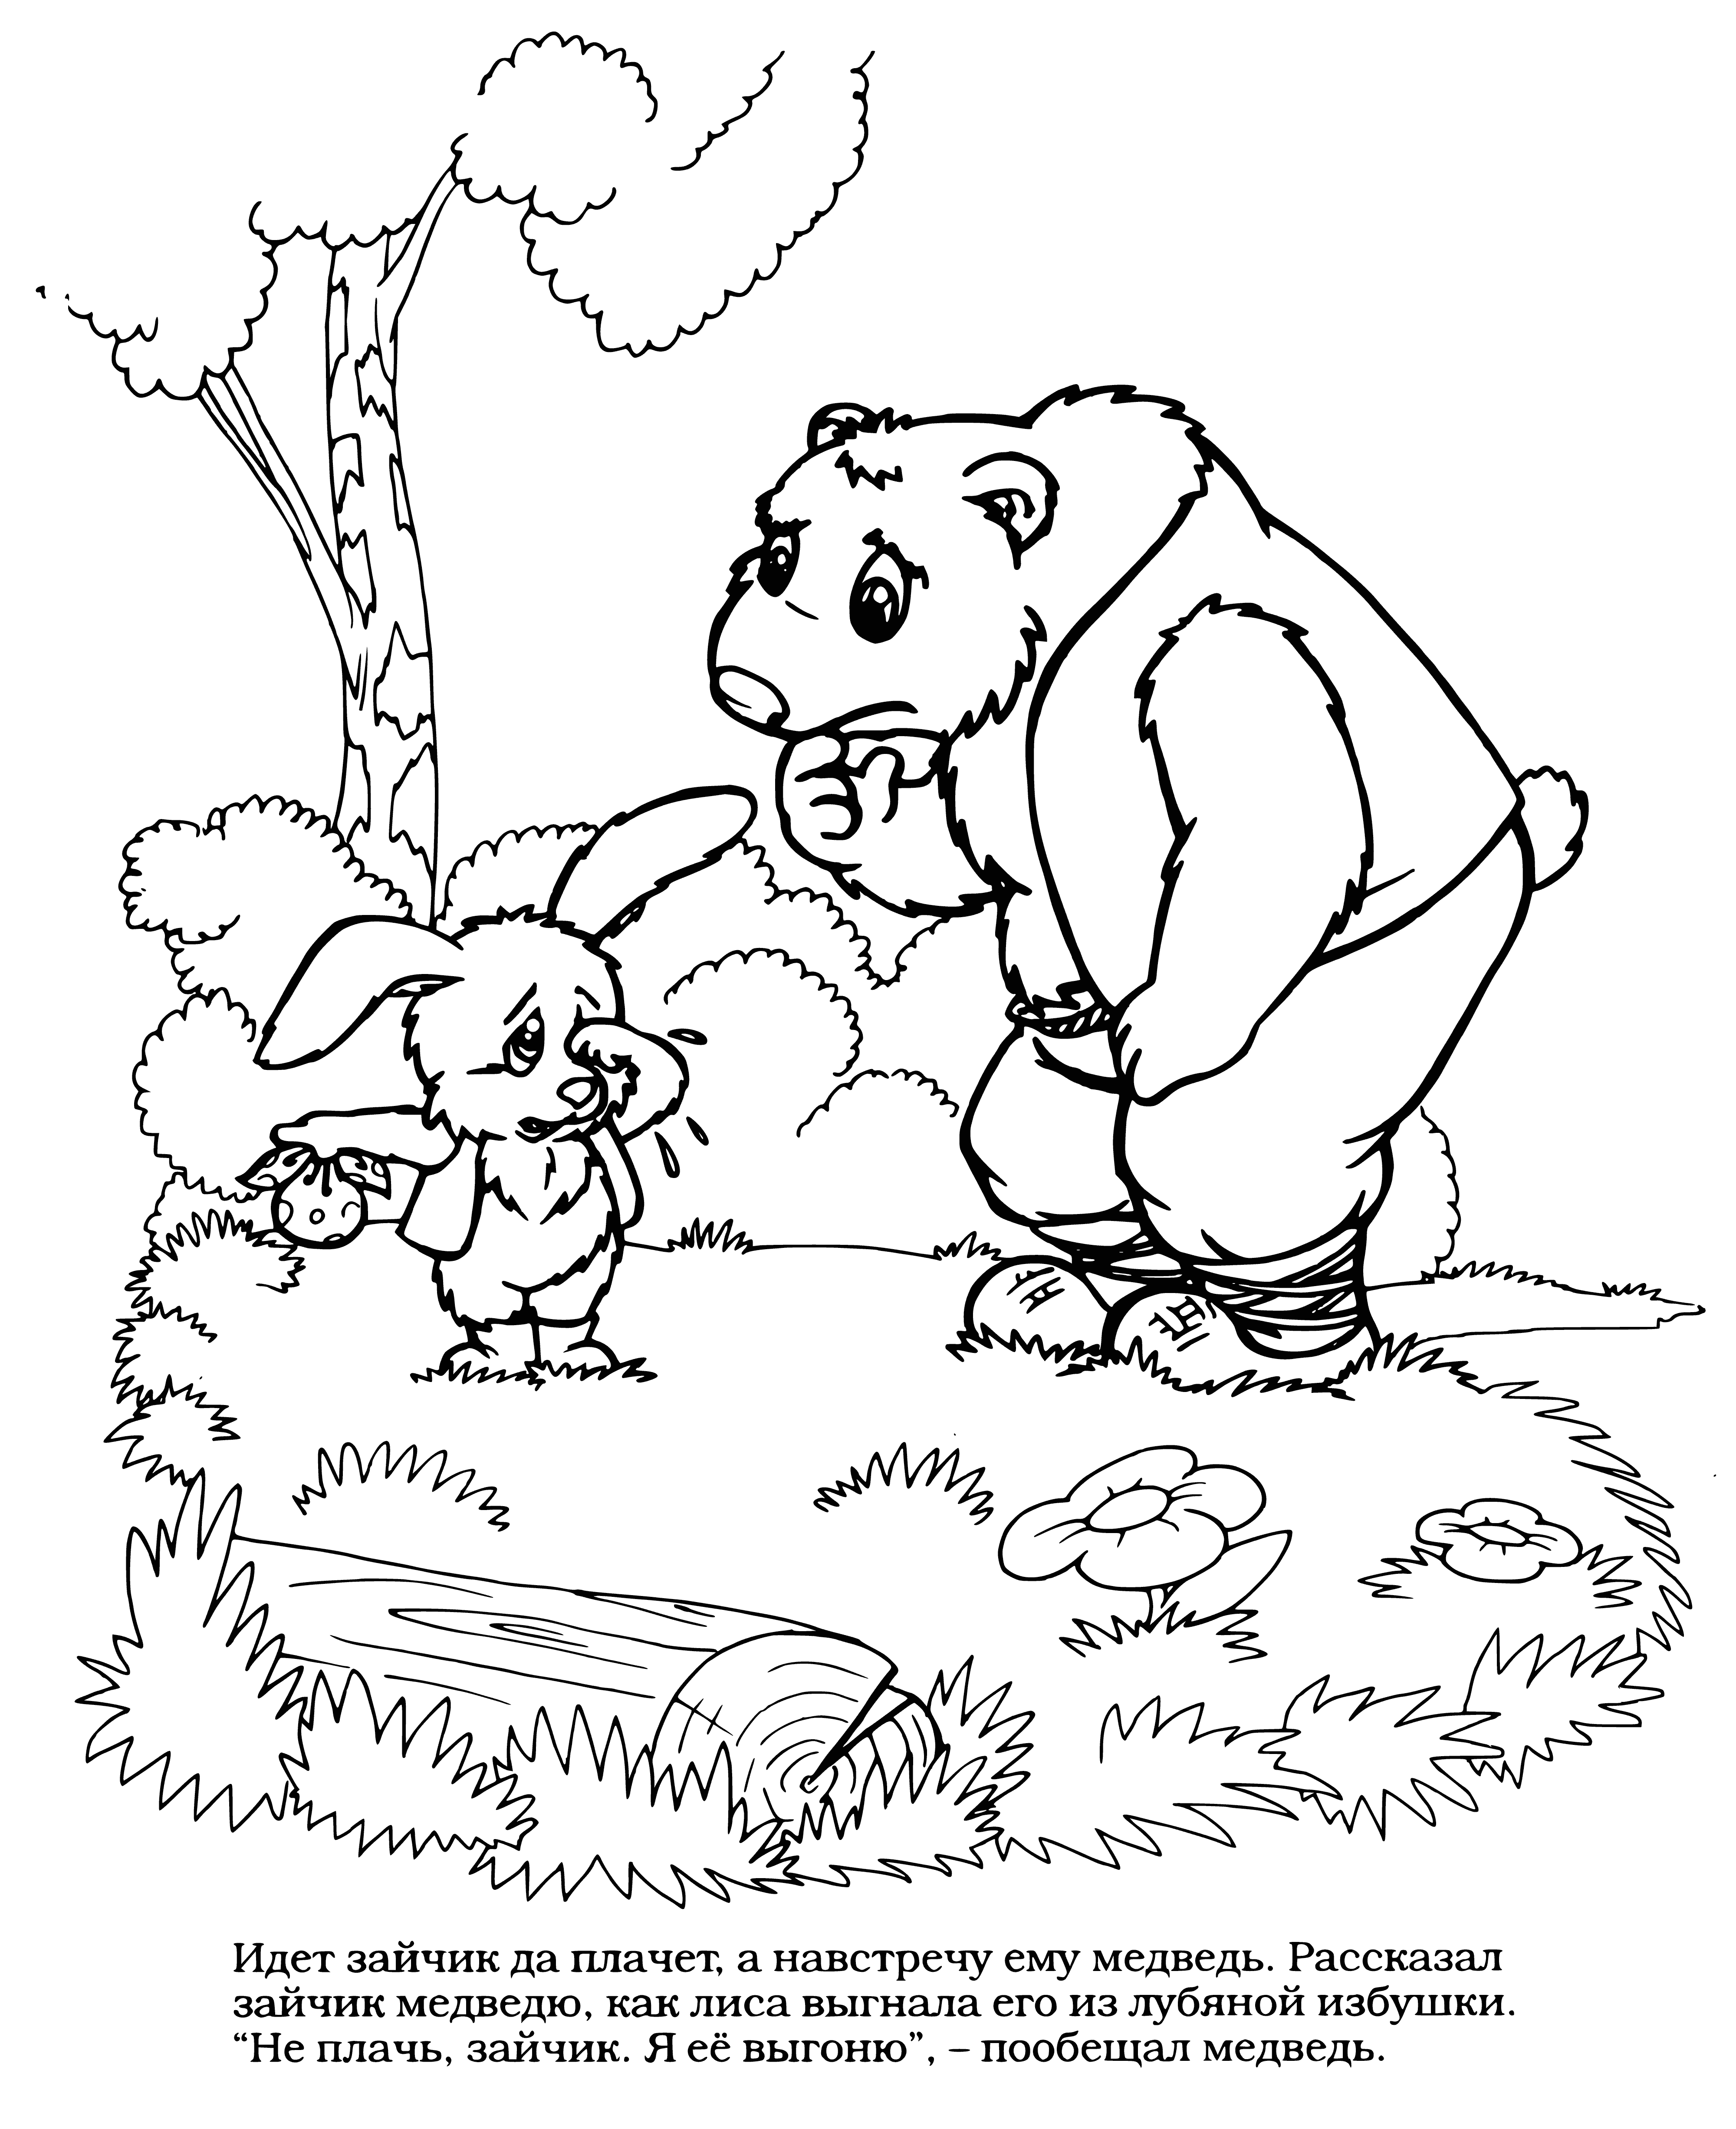 Bunny met a bear coloring page